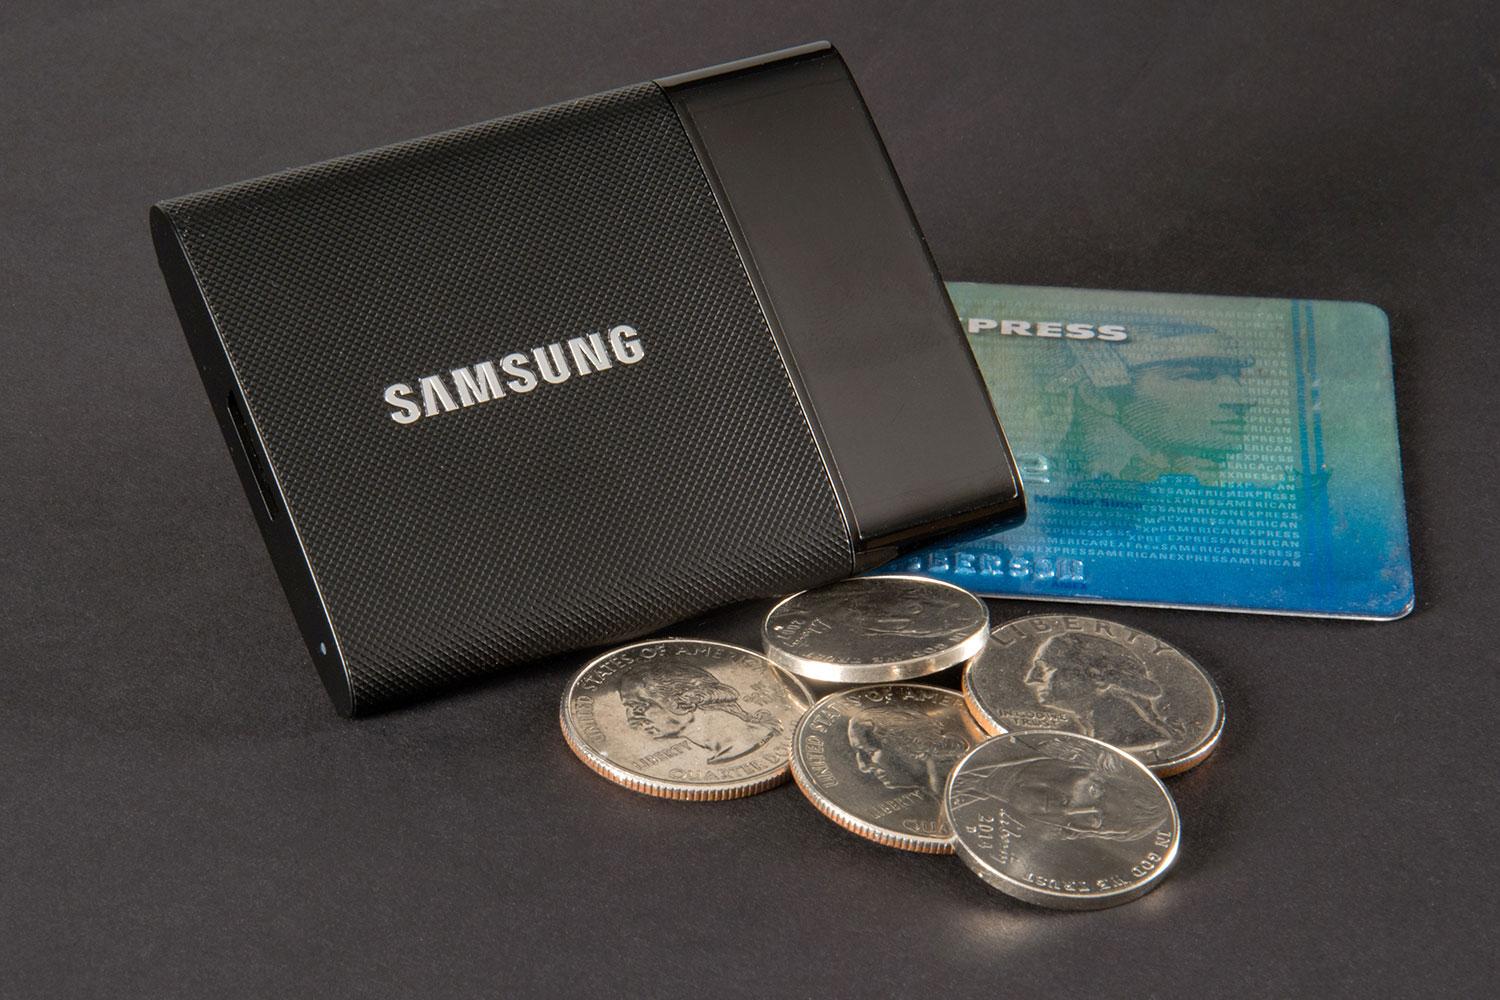 Samsung Portable SSD T1 coins